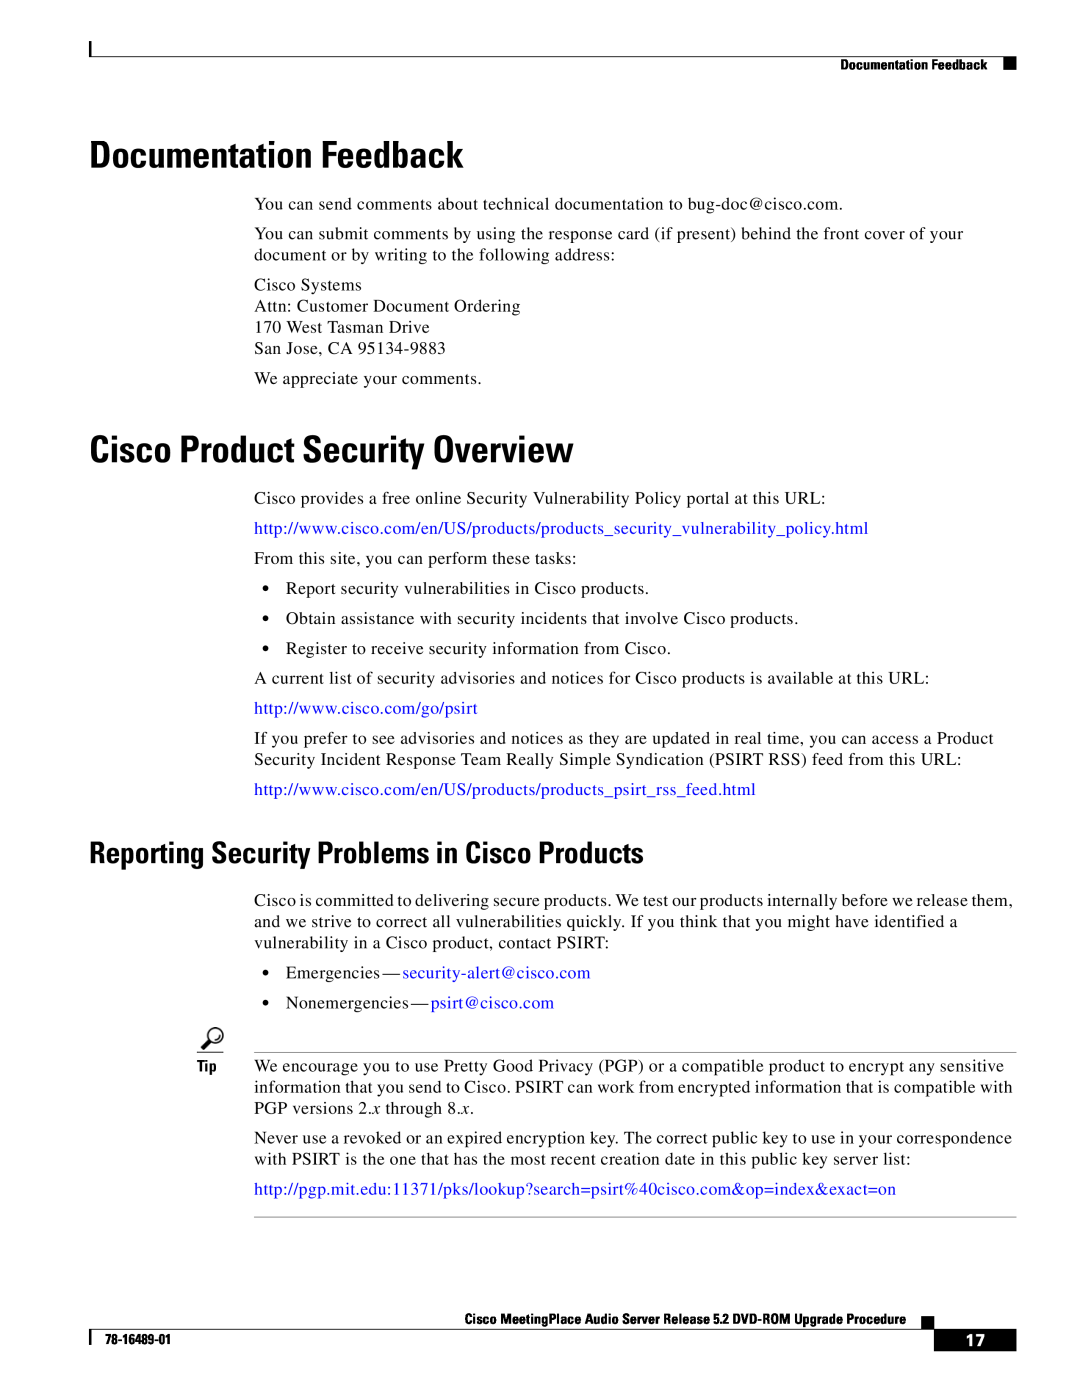 Cisco Systems DVD-ROM Documentation Feedback, Cisco Product Security Overview, Emergencies - security-alert@cisco.com 